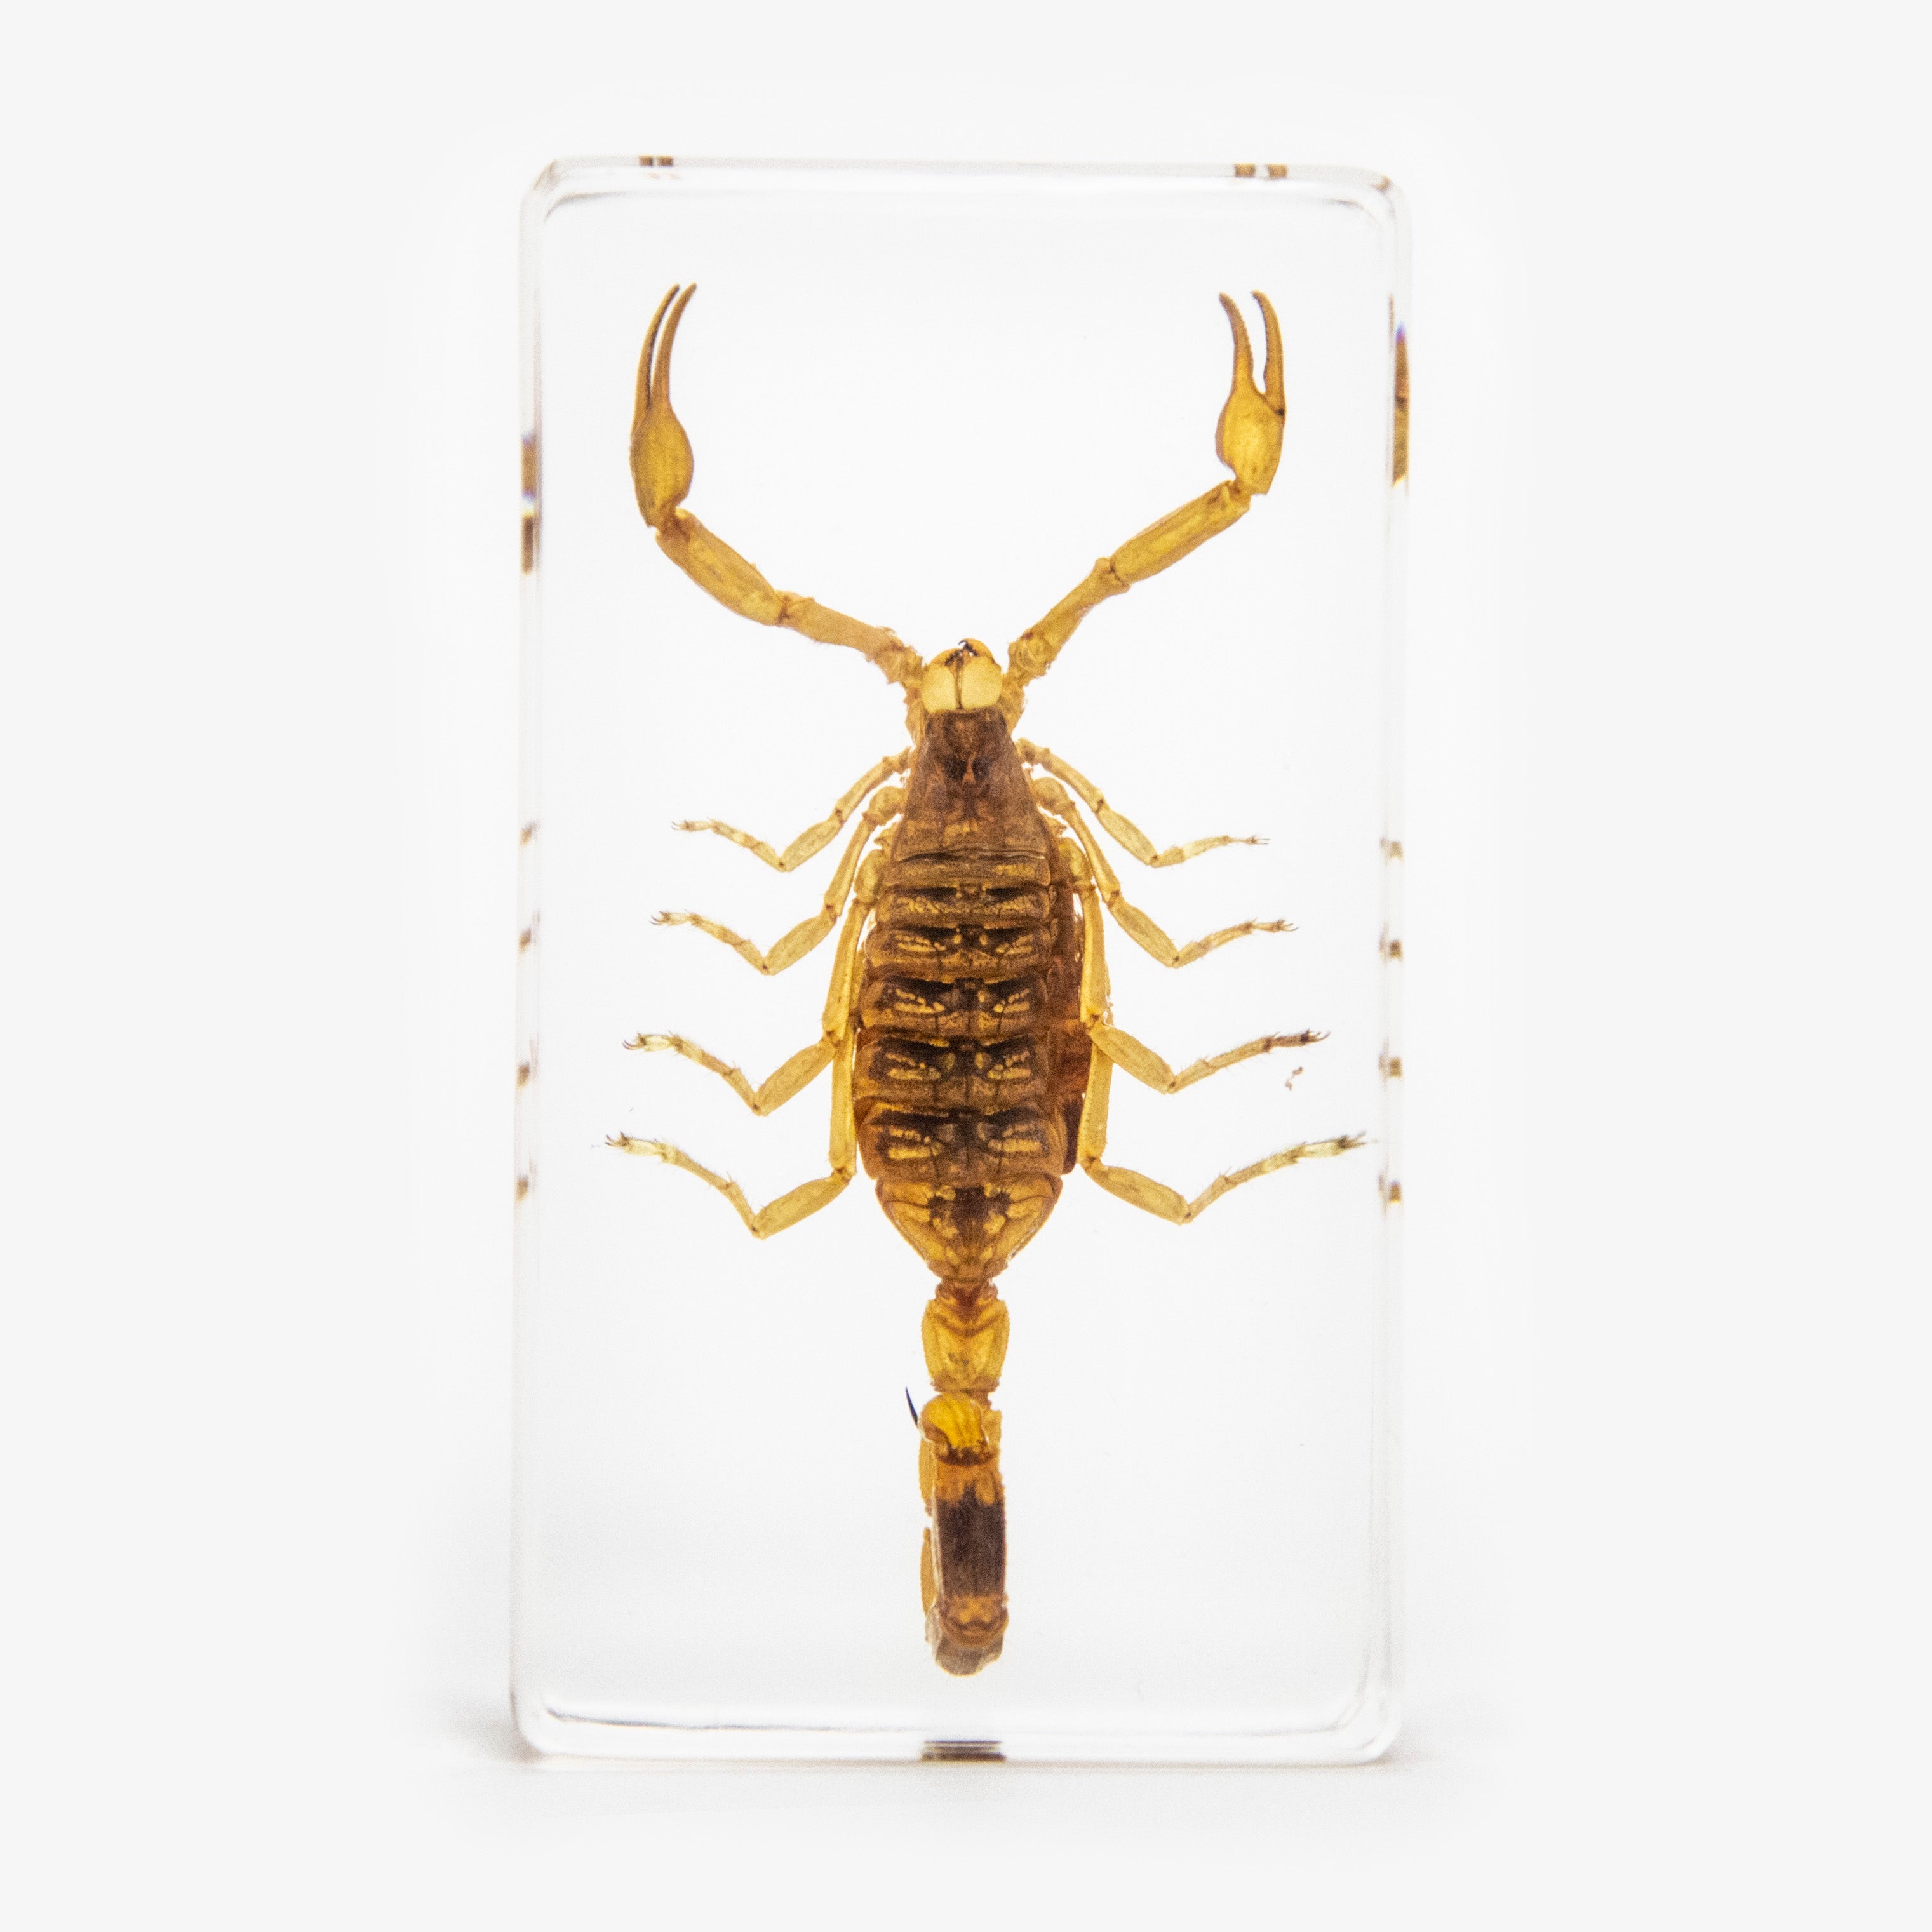 Golden Scorpion Resin Paperweight